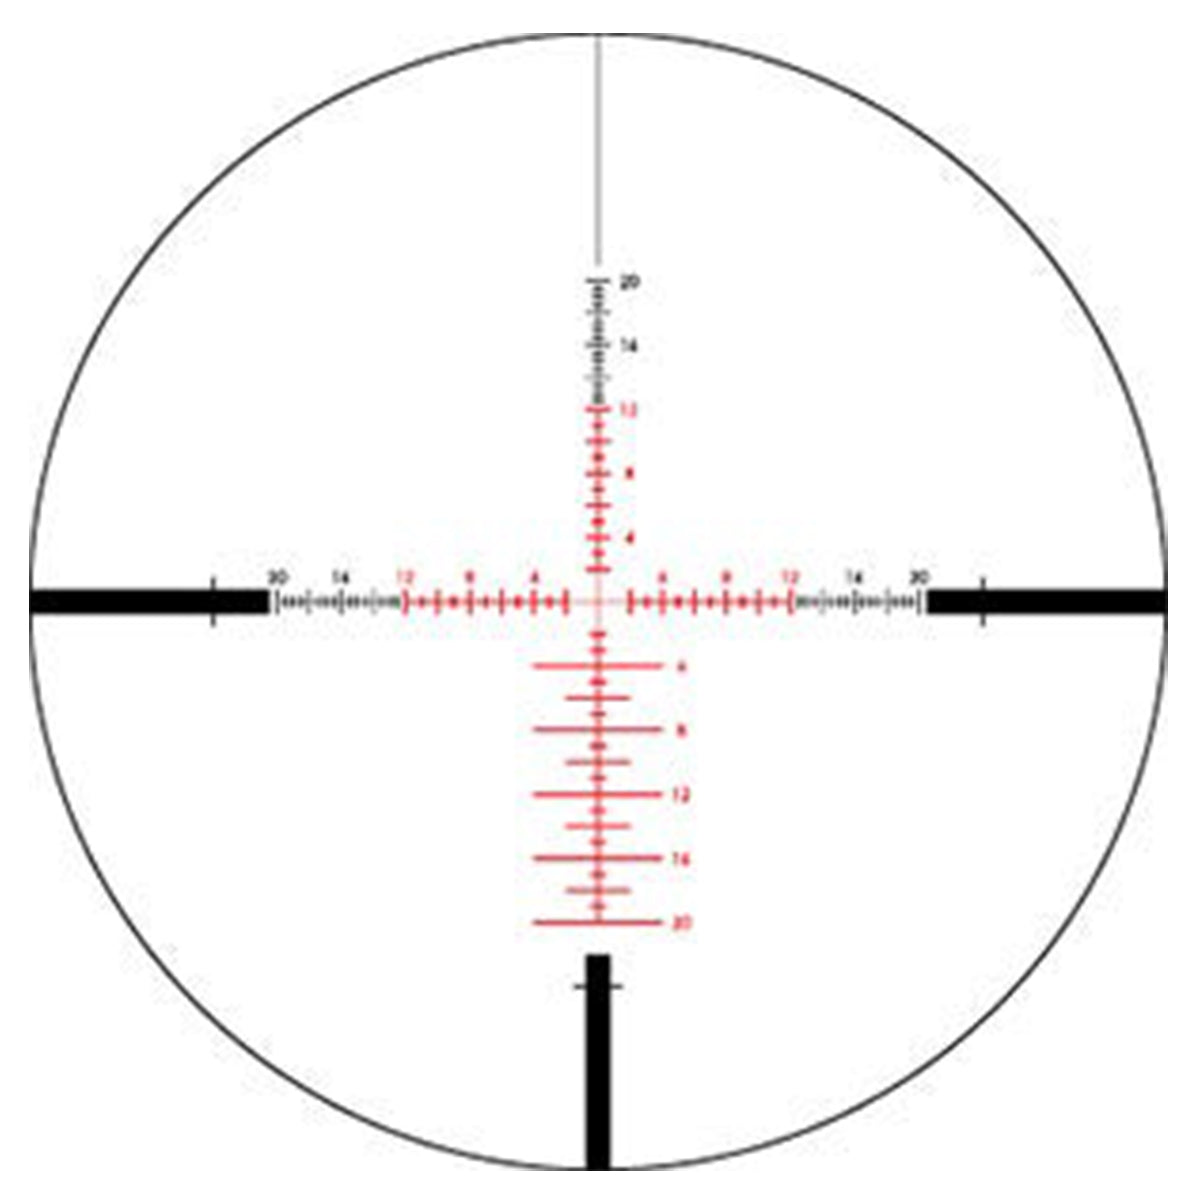 Vortex Viper PST Gen II 3-15x44 SFP EBR-4 MOA Riflescope in Vortex Viper PST Gen II 3-15x44 SFP EBR-4 MOA Riflescope by Vortex Optics | Optics - goHUNT Shop by GOHUNT | Vortex Optics - GOHUNT Shop